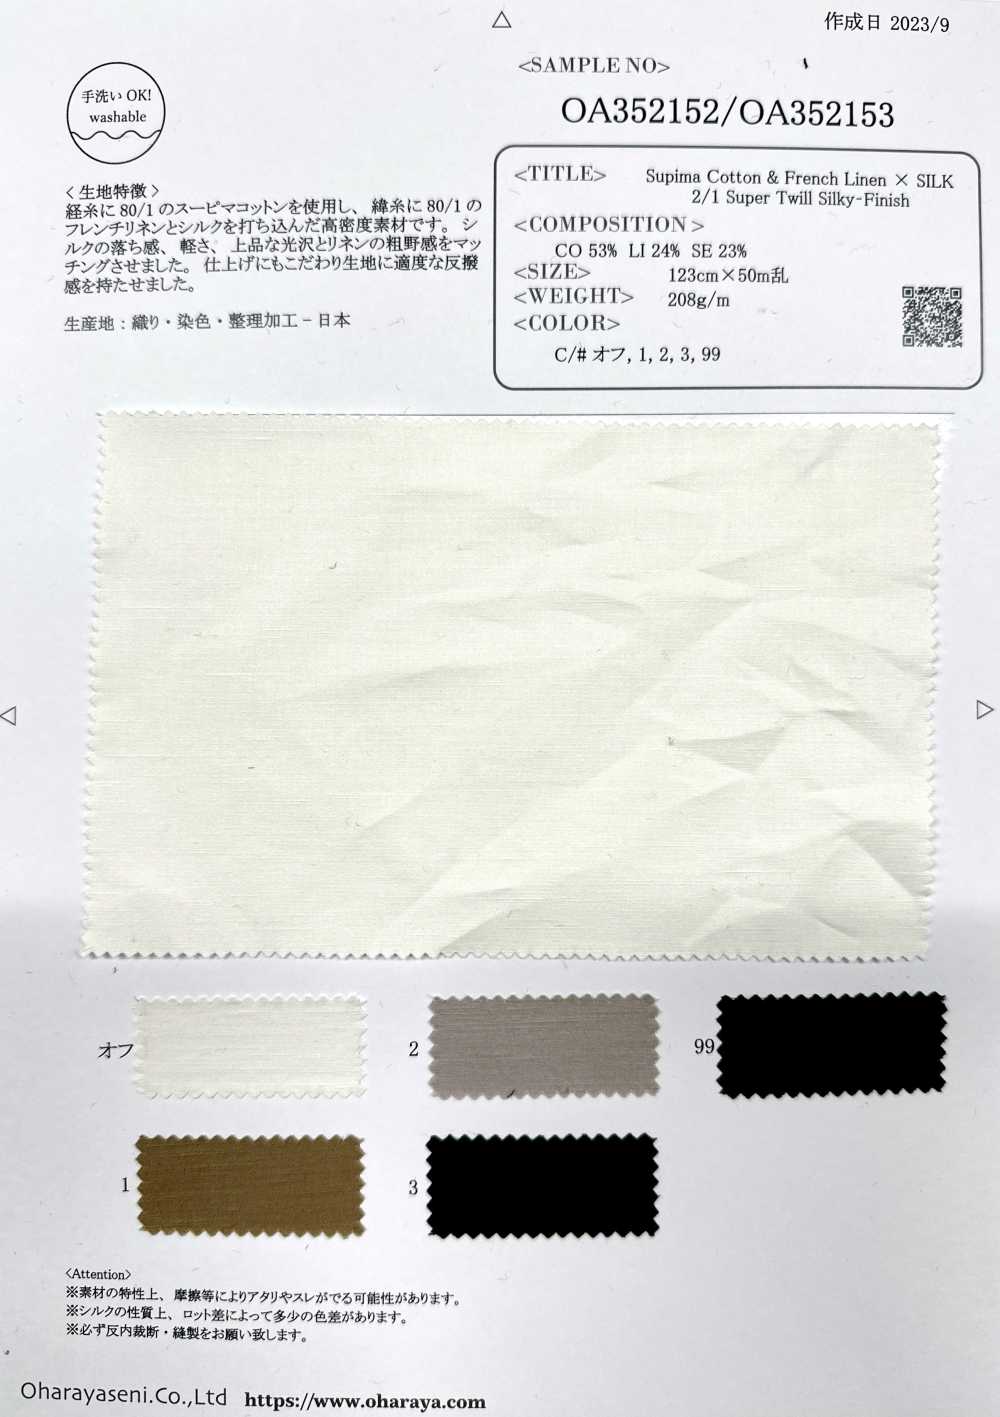 OA352152 Algodón Supima Y Lino Francés × SILK 2/1 Super Twill Acabado Sedoso[Fabrica Textil] Oharayaseni